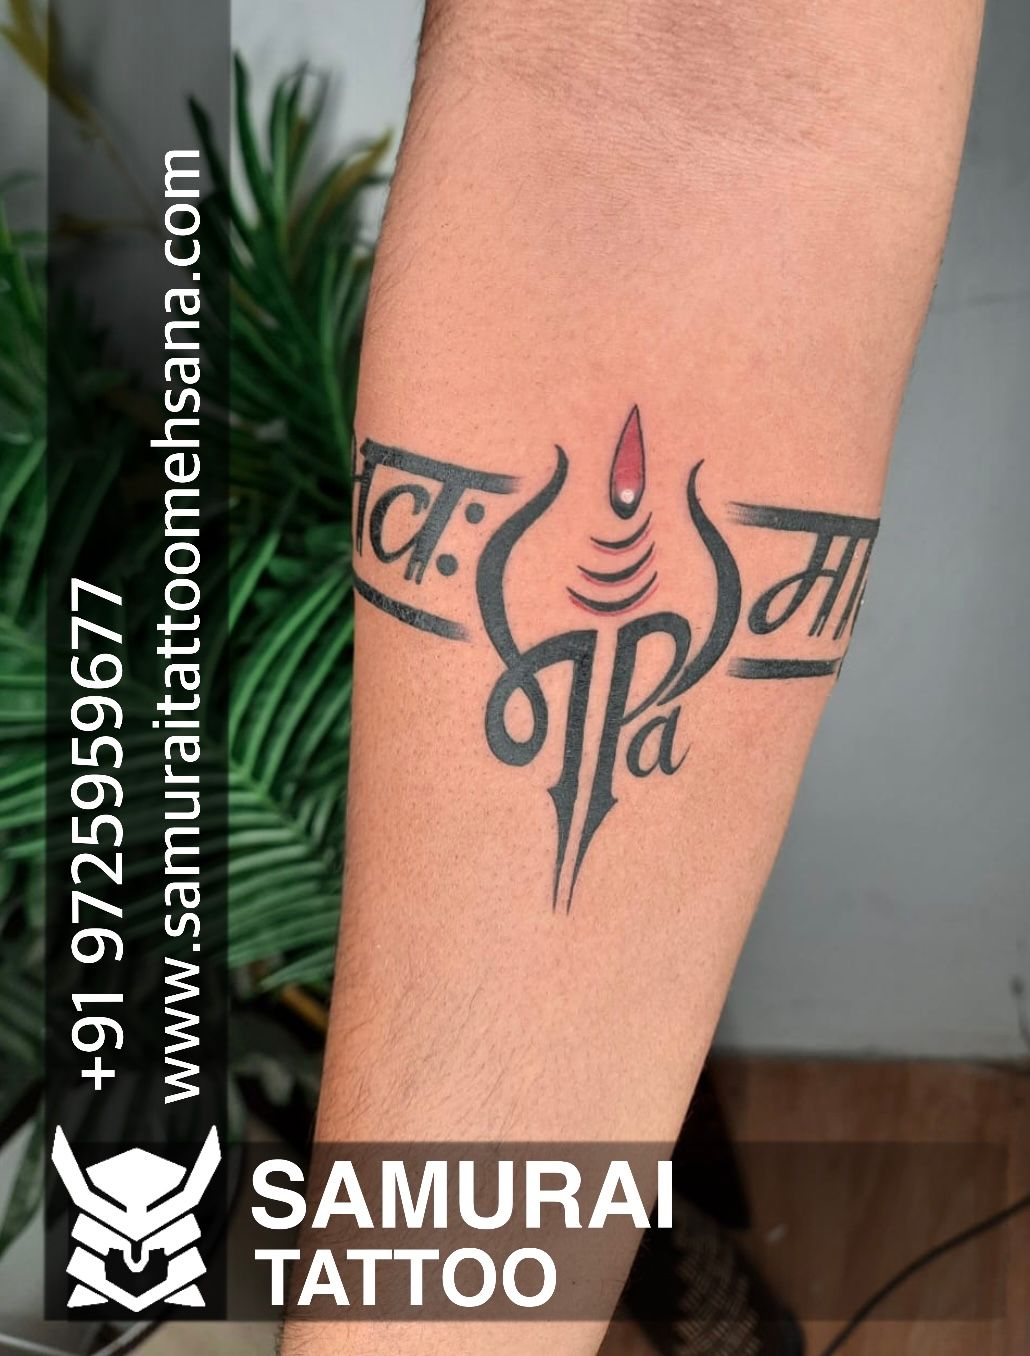 Tattoo uploaded by Samurai Tattoo mehsana • Band tattoo ideas |Band tattoo  design |Band tattoo |tattoo for boys |mom dad tattoo |band tattoo for mom  dad • Tattoodo